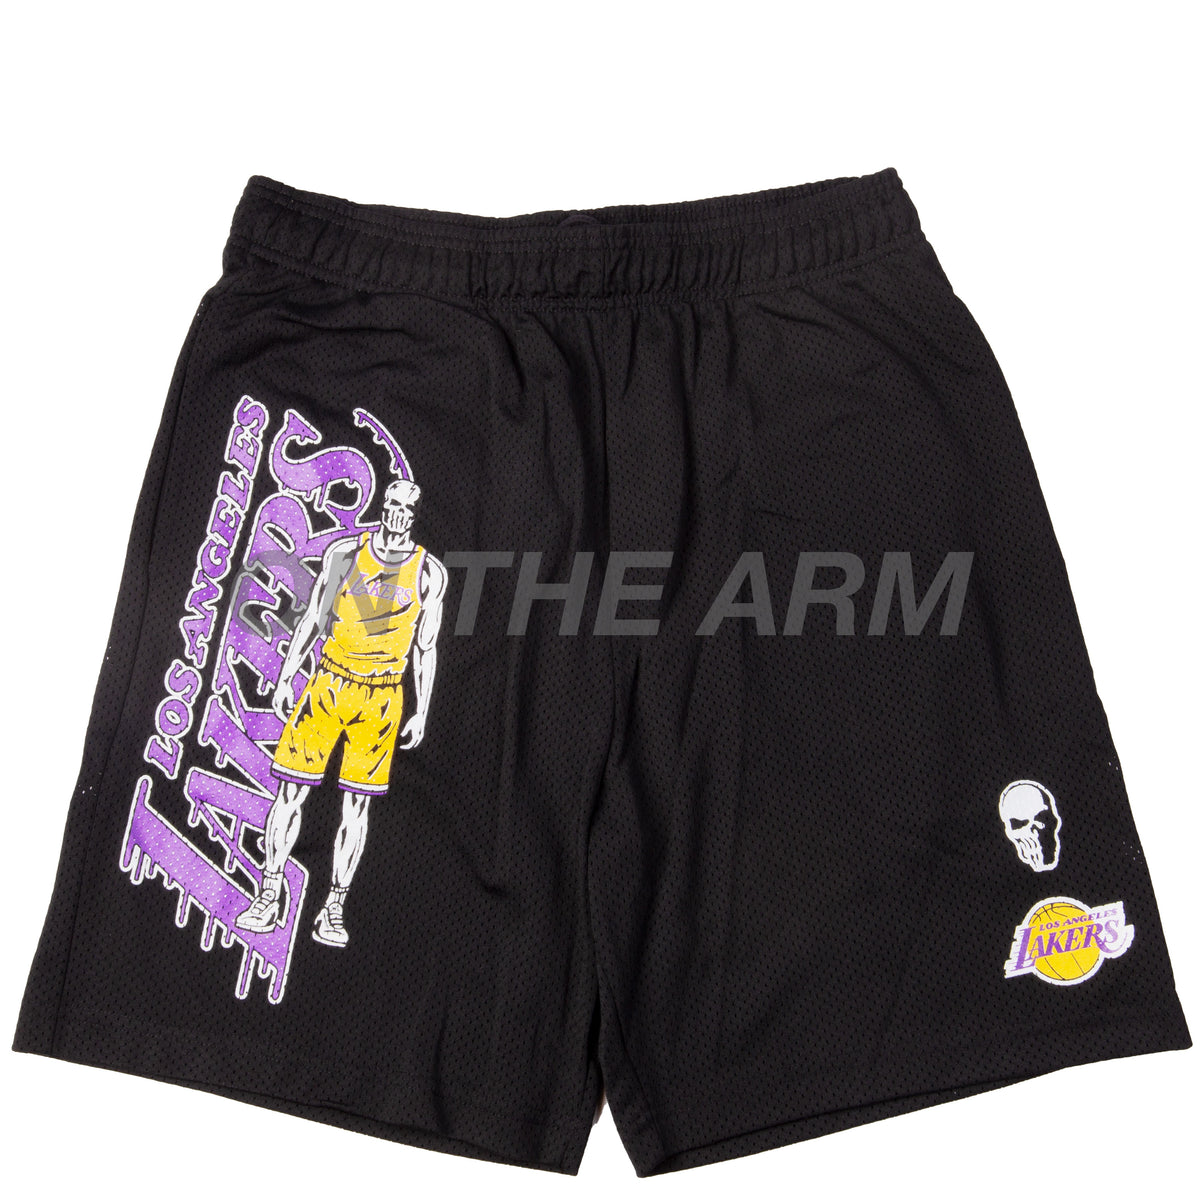 Warren Lotas Black Lakers Mesh Shorts – On The Arm